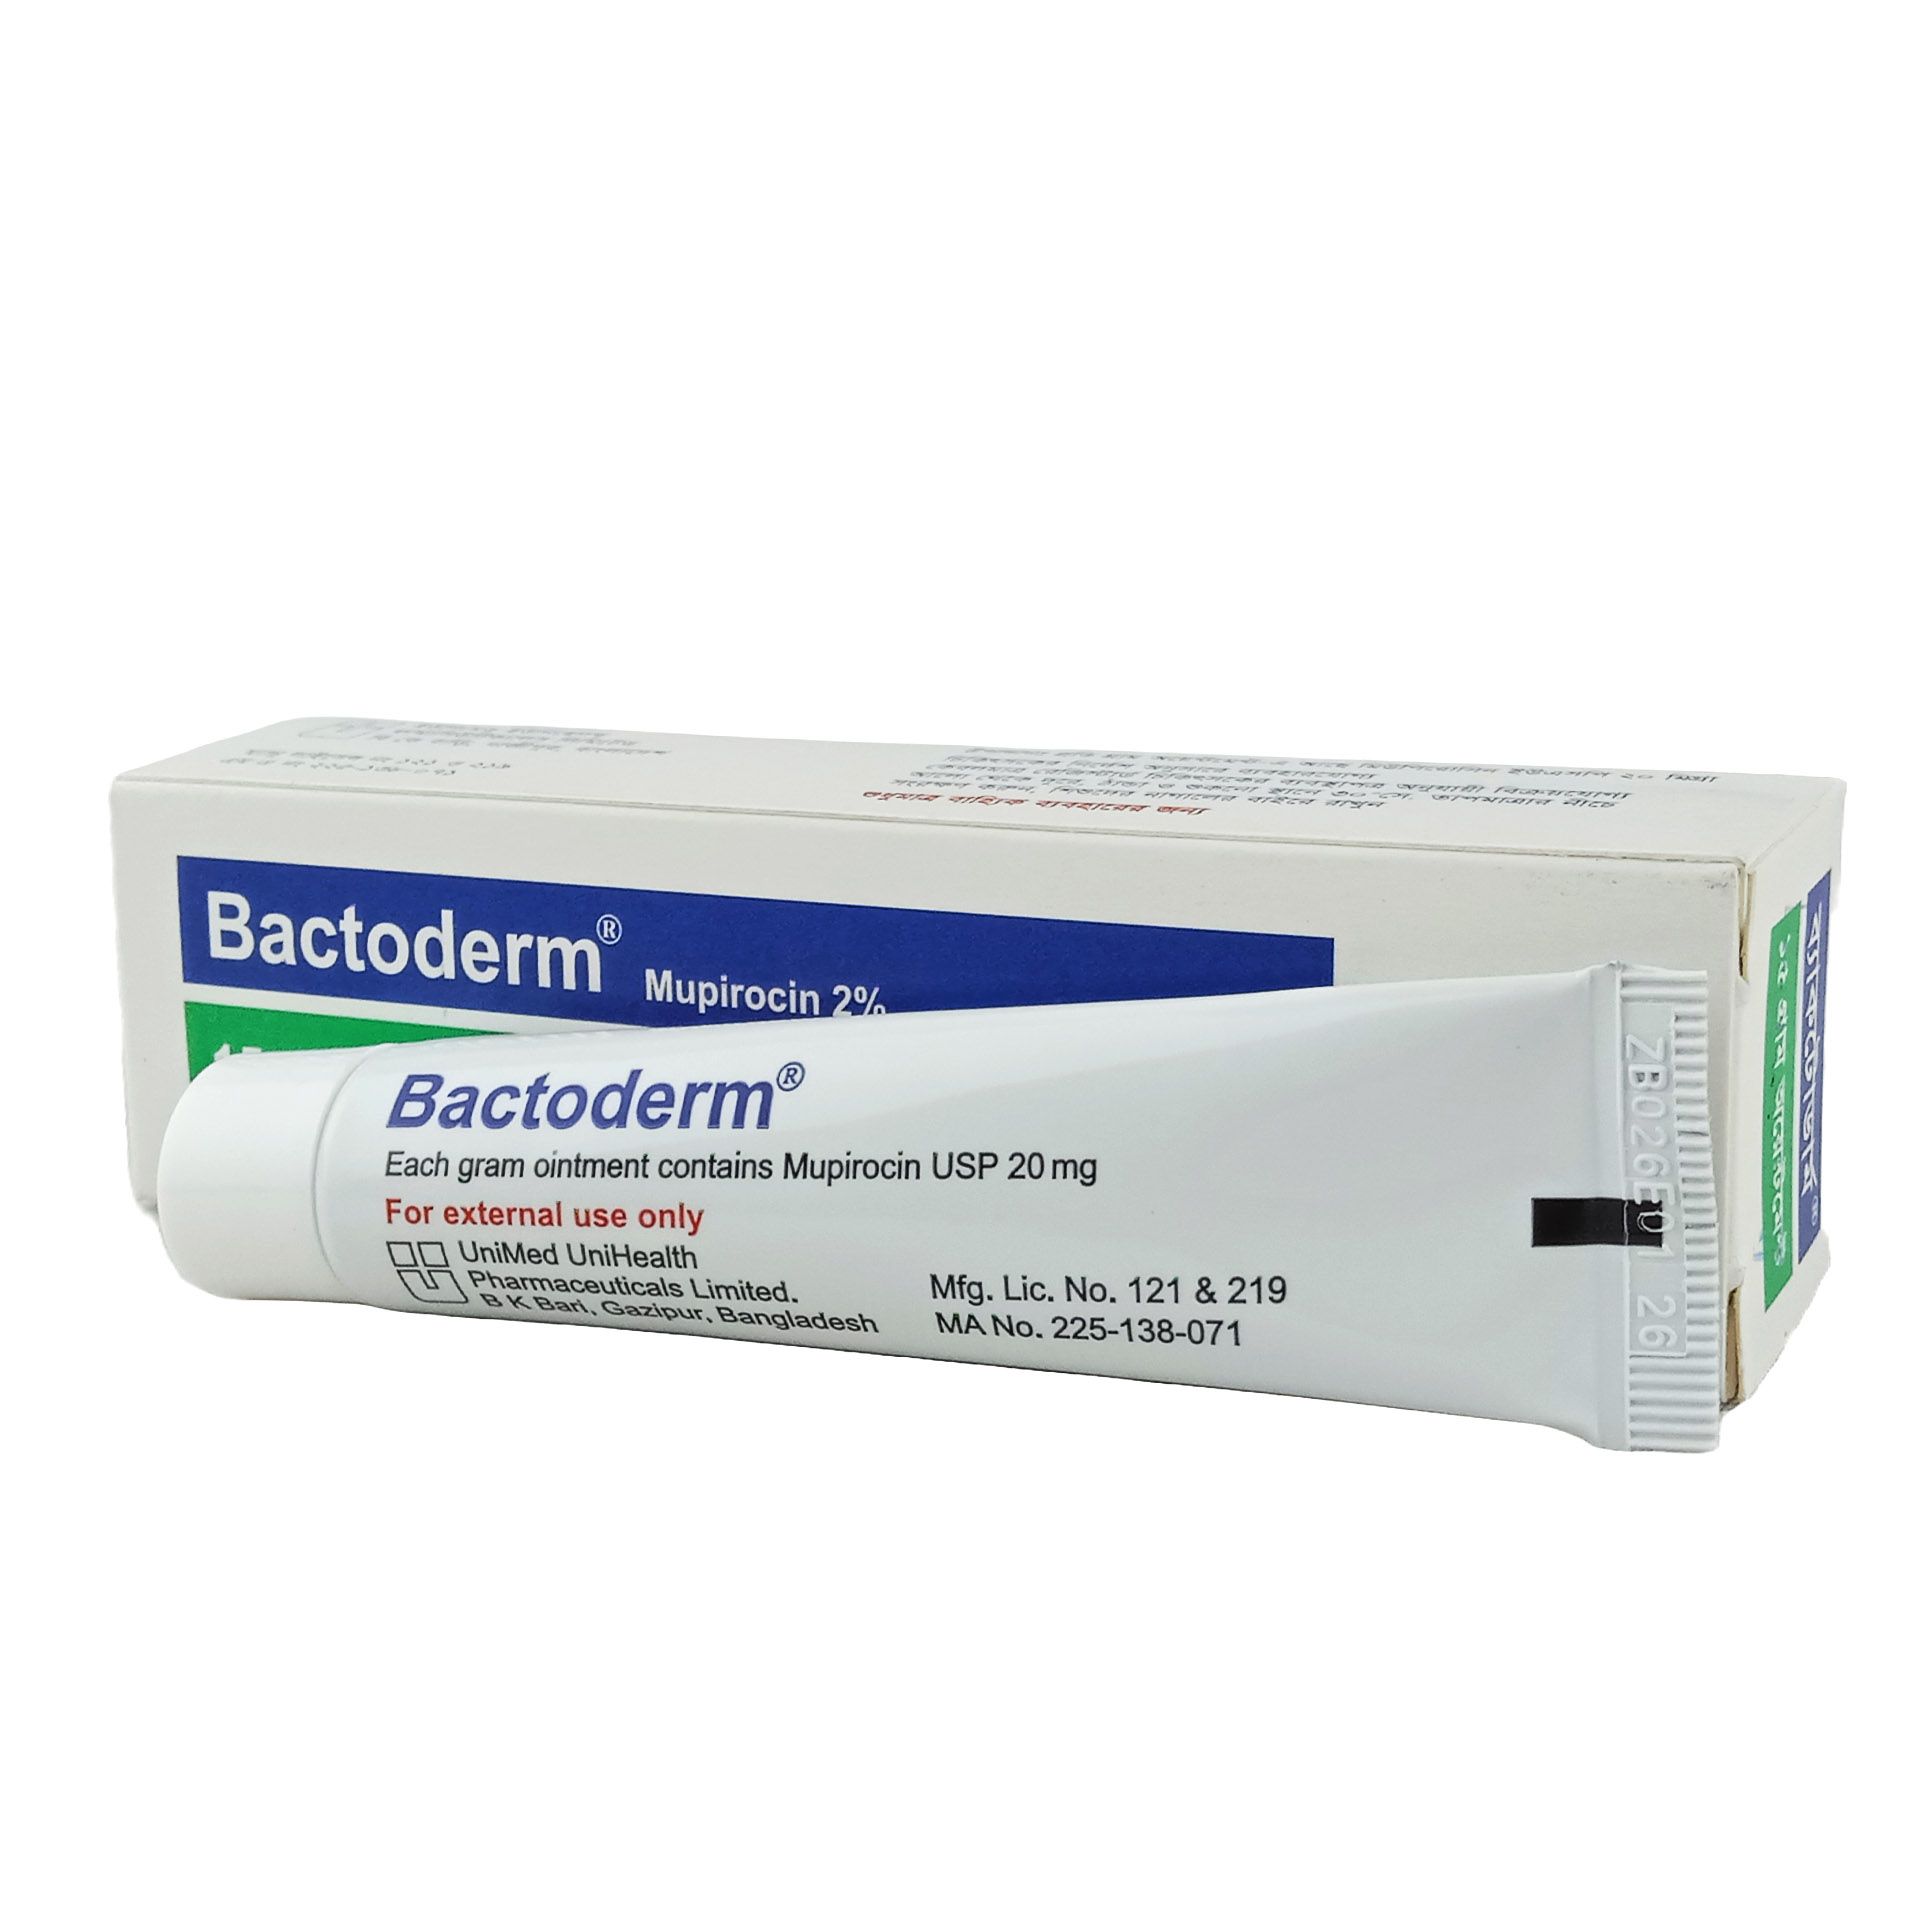 Bactoderm 2% Ointment